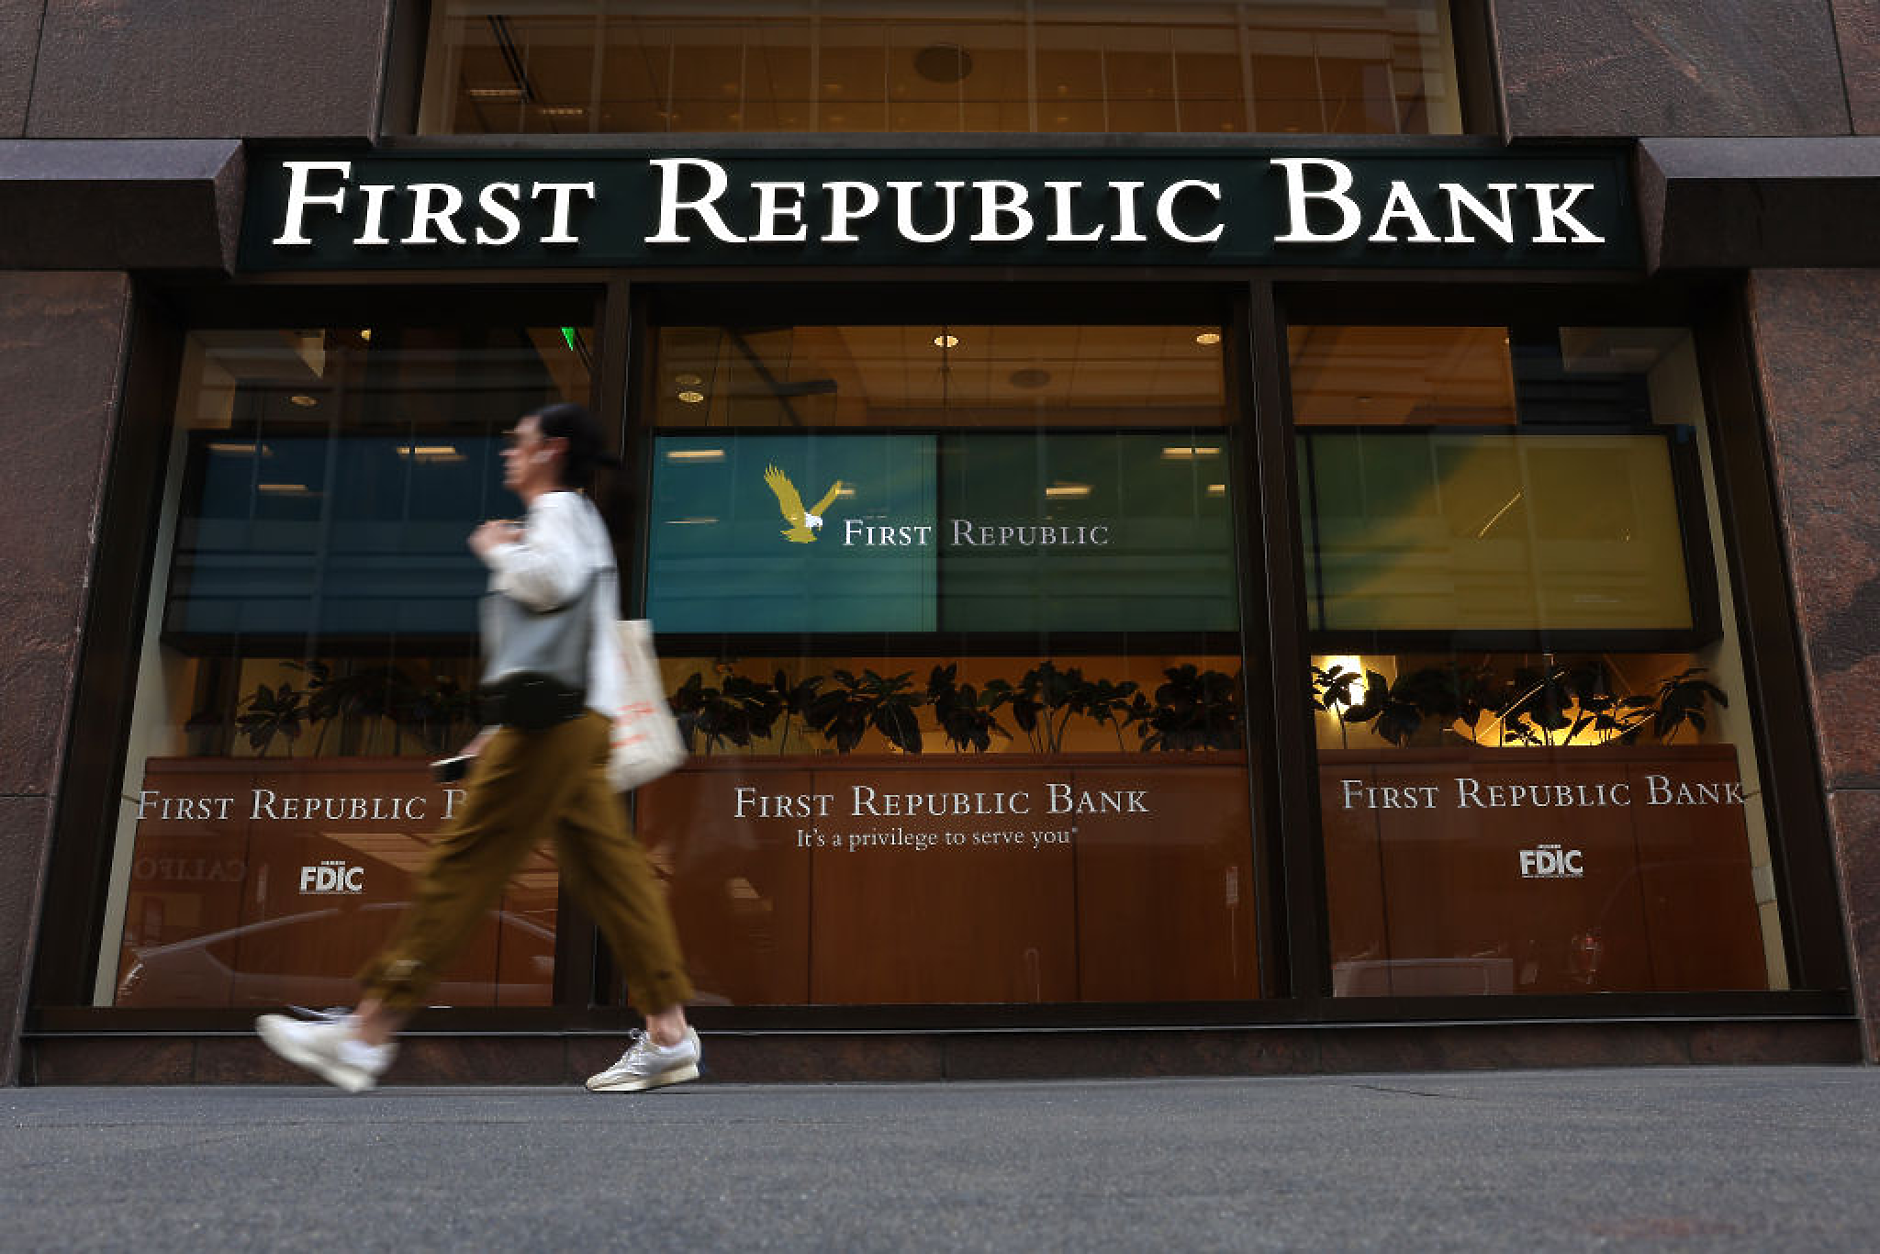 First Republic фалира, JP Morgan поема депозитите на банката